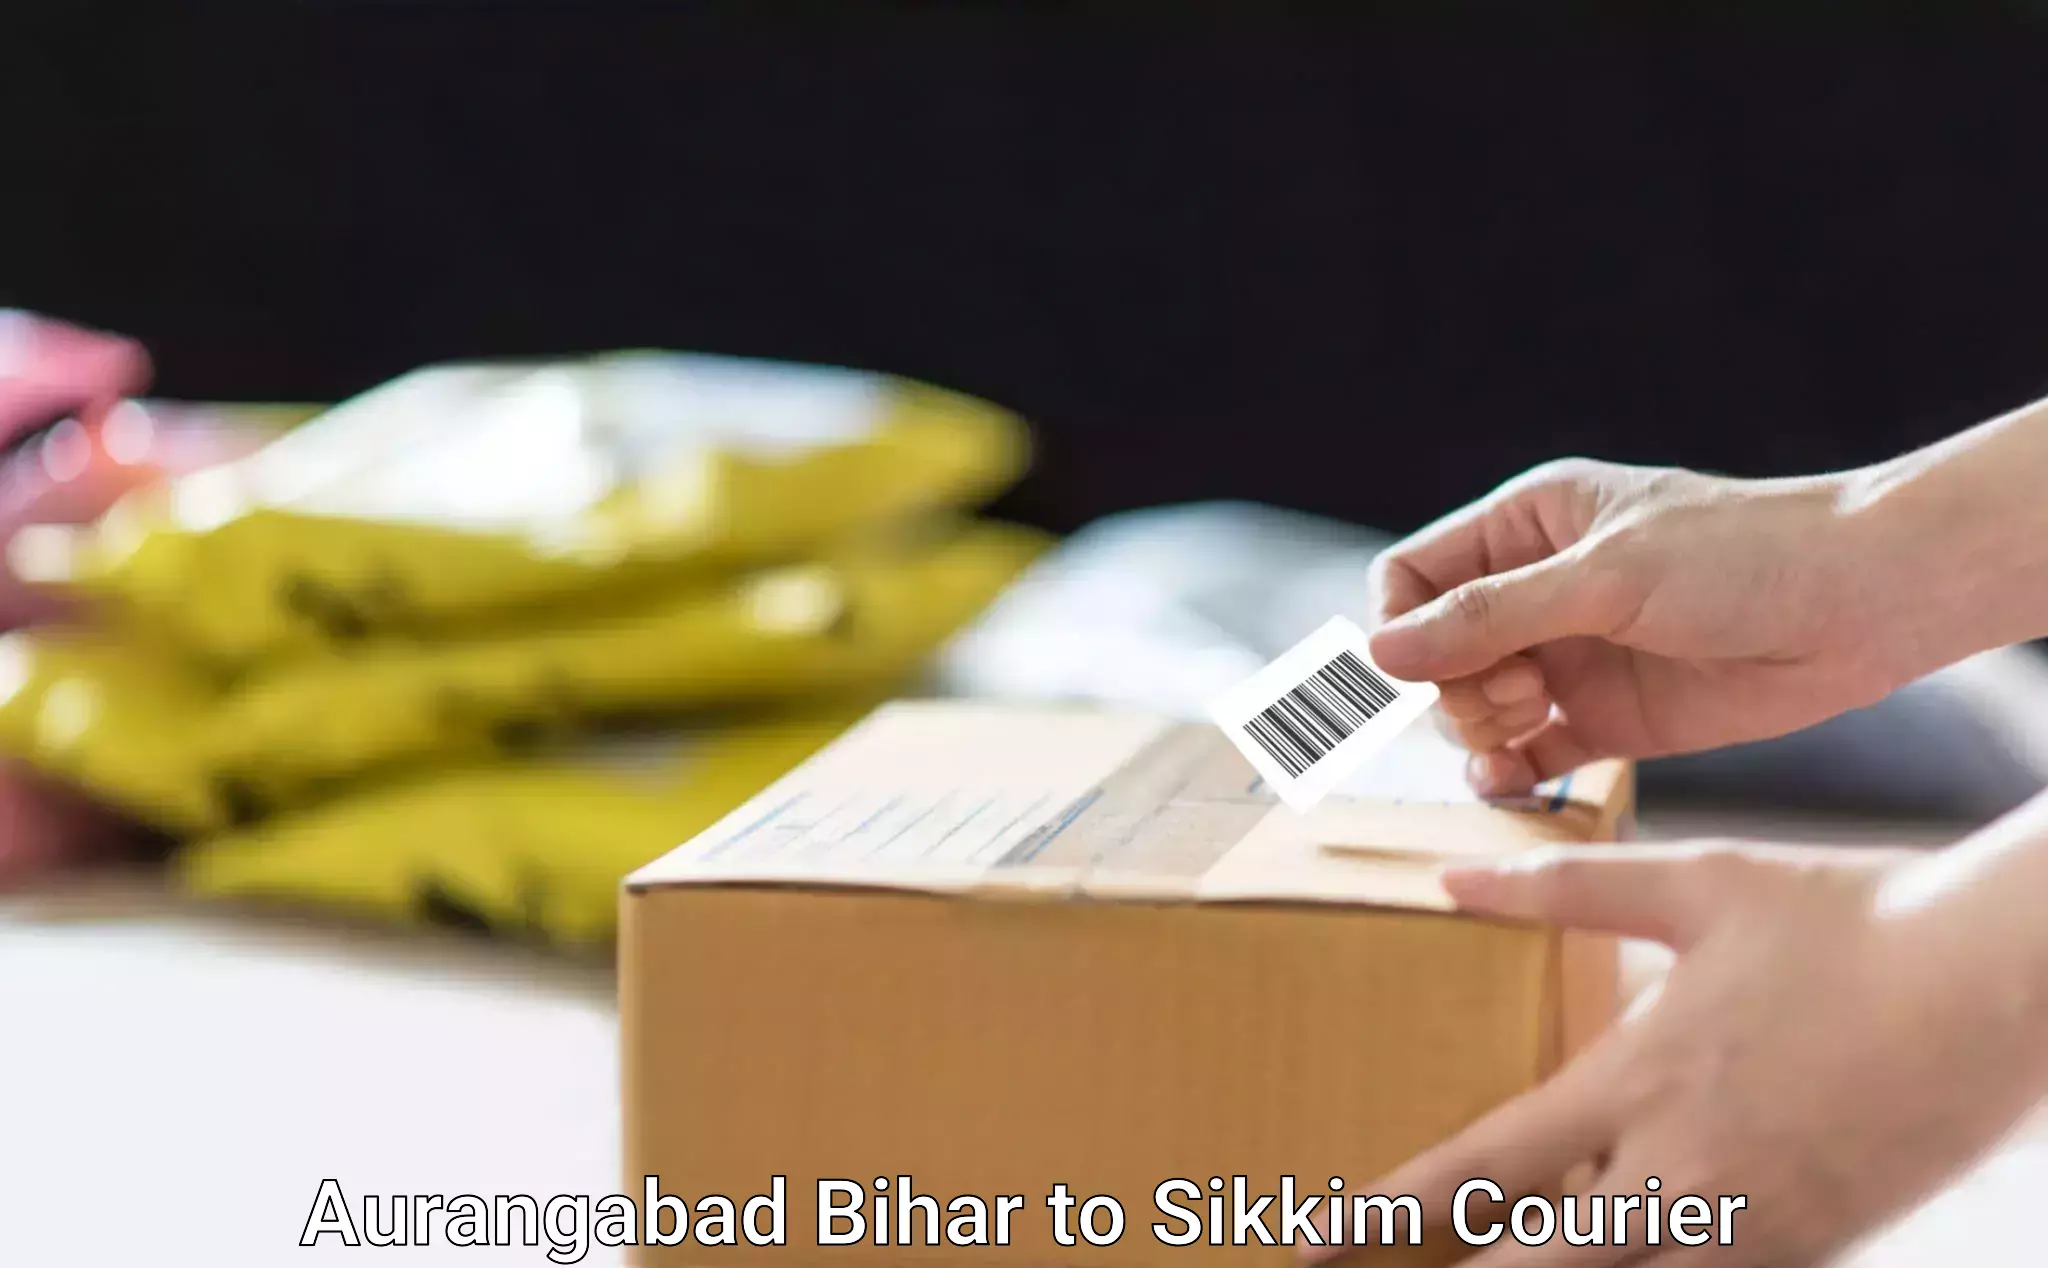 High-quality moving services Aurangabad Bihar to Sikkim